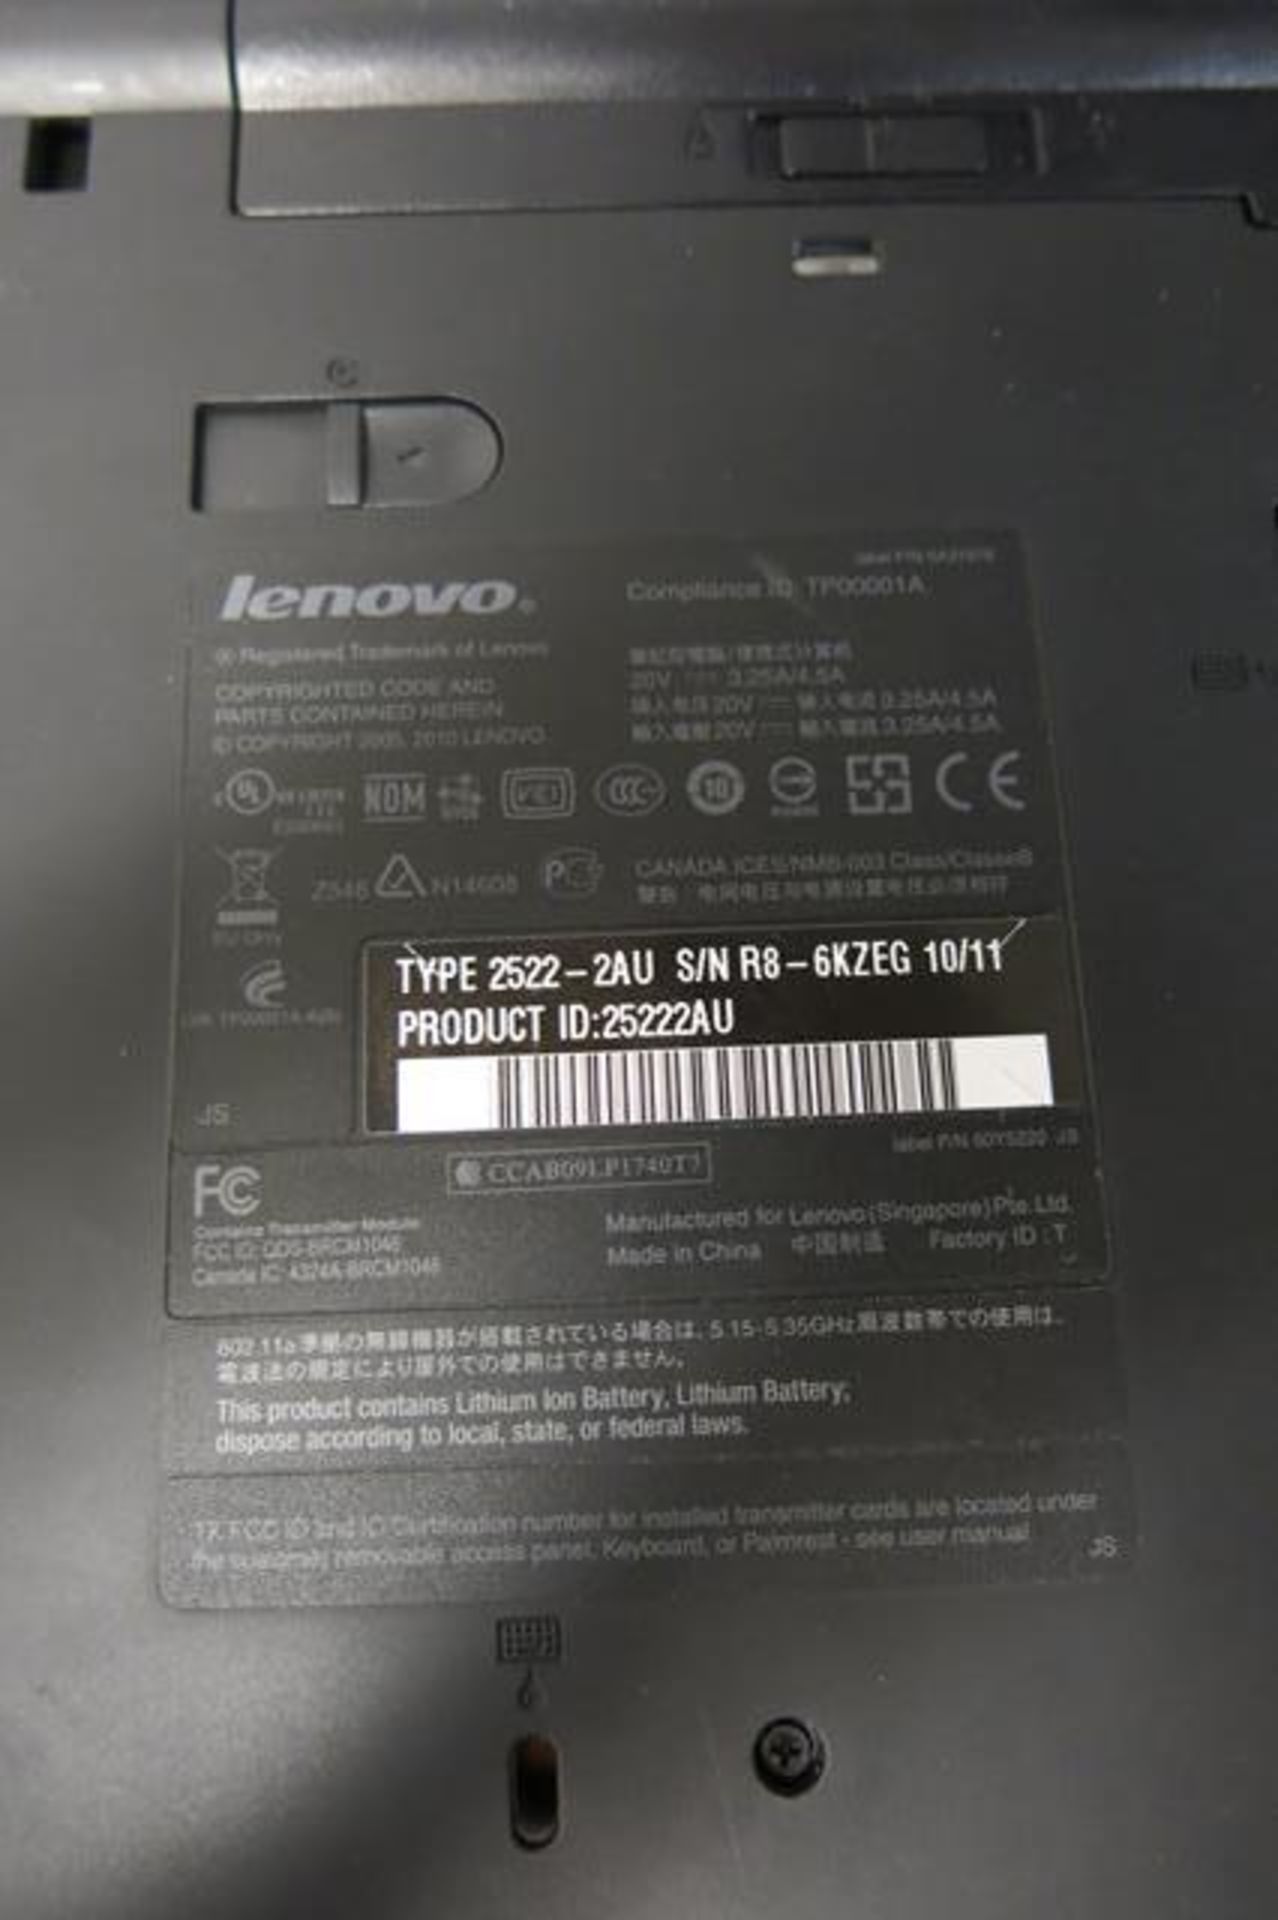 LENOVO, T410, LAPTOP, INTEL I5 @ 2.4 GHZ, 4 GB RAM, 232 GB HDD, WINDOWS 7 PRO - Image 4 of 4